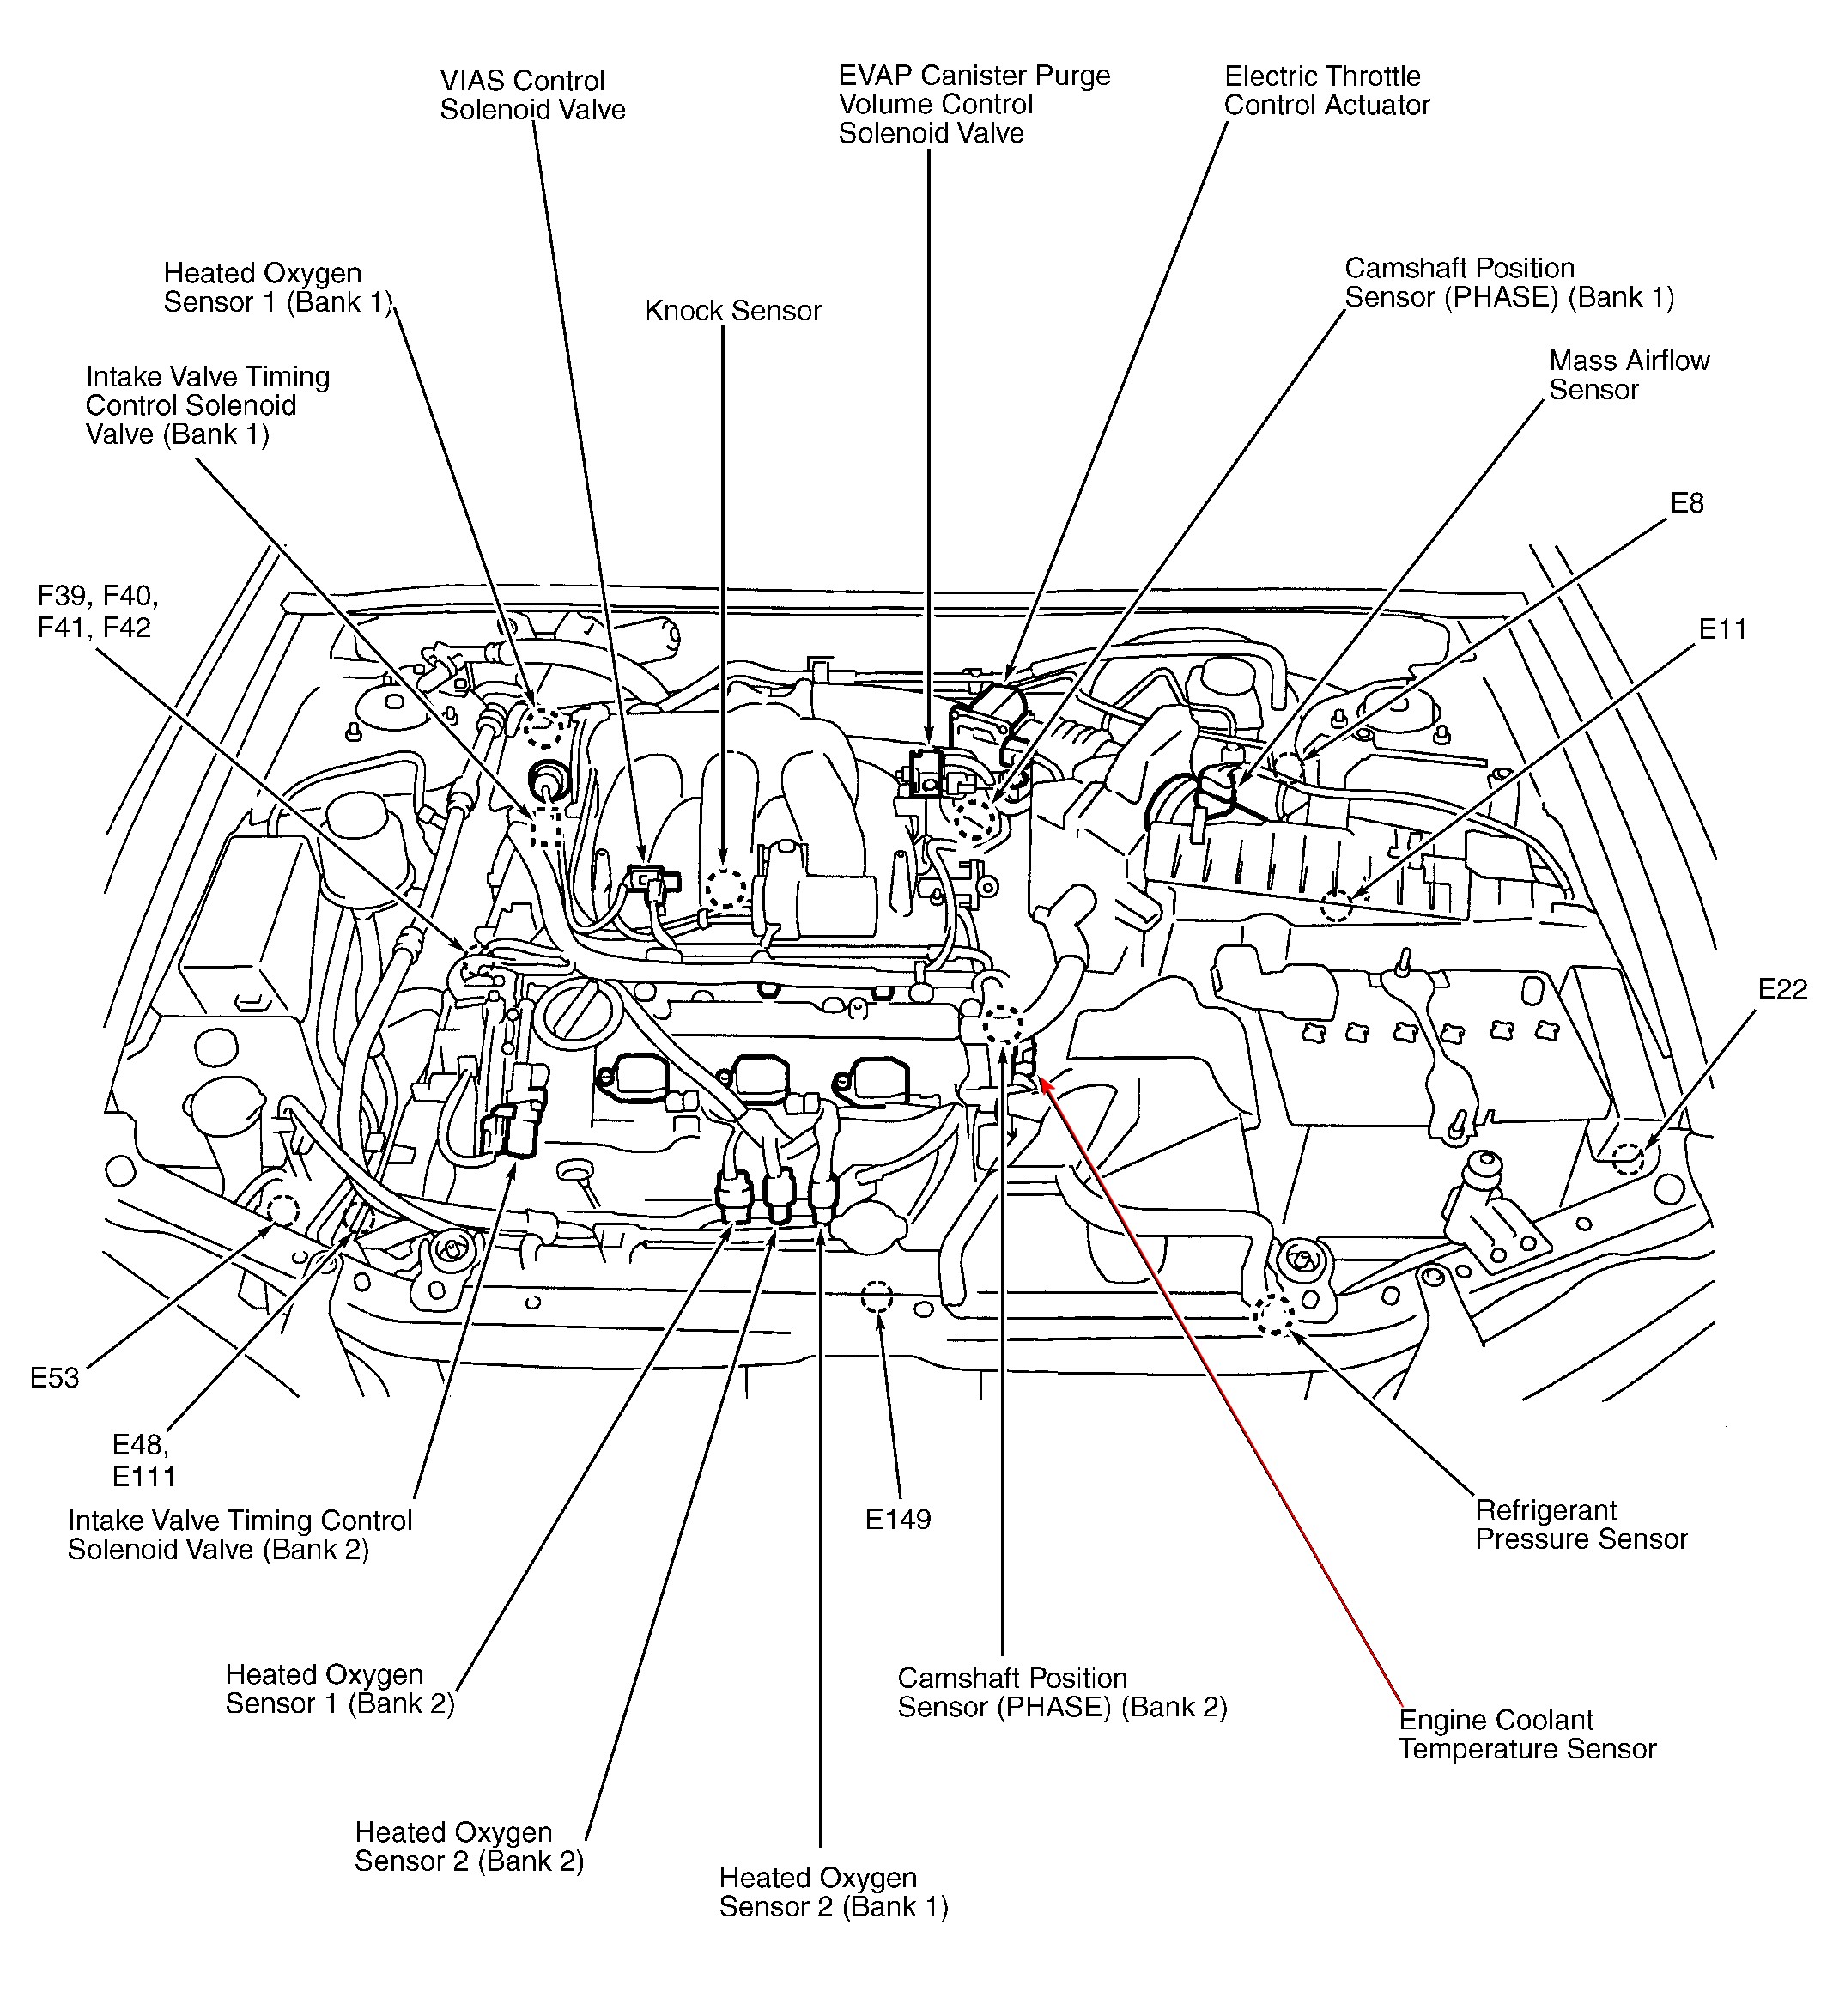 2008 Nissan Sentra Engine Diagram Wiring Diagram Moreover 2001 Nissan Maxima Exhaust System Diagram Of 2008 Nissan Sentra Engine Diagram